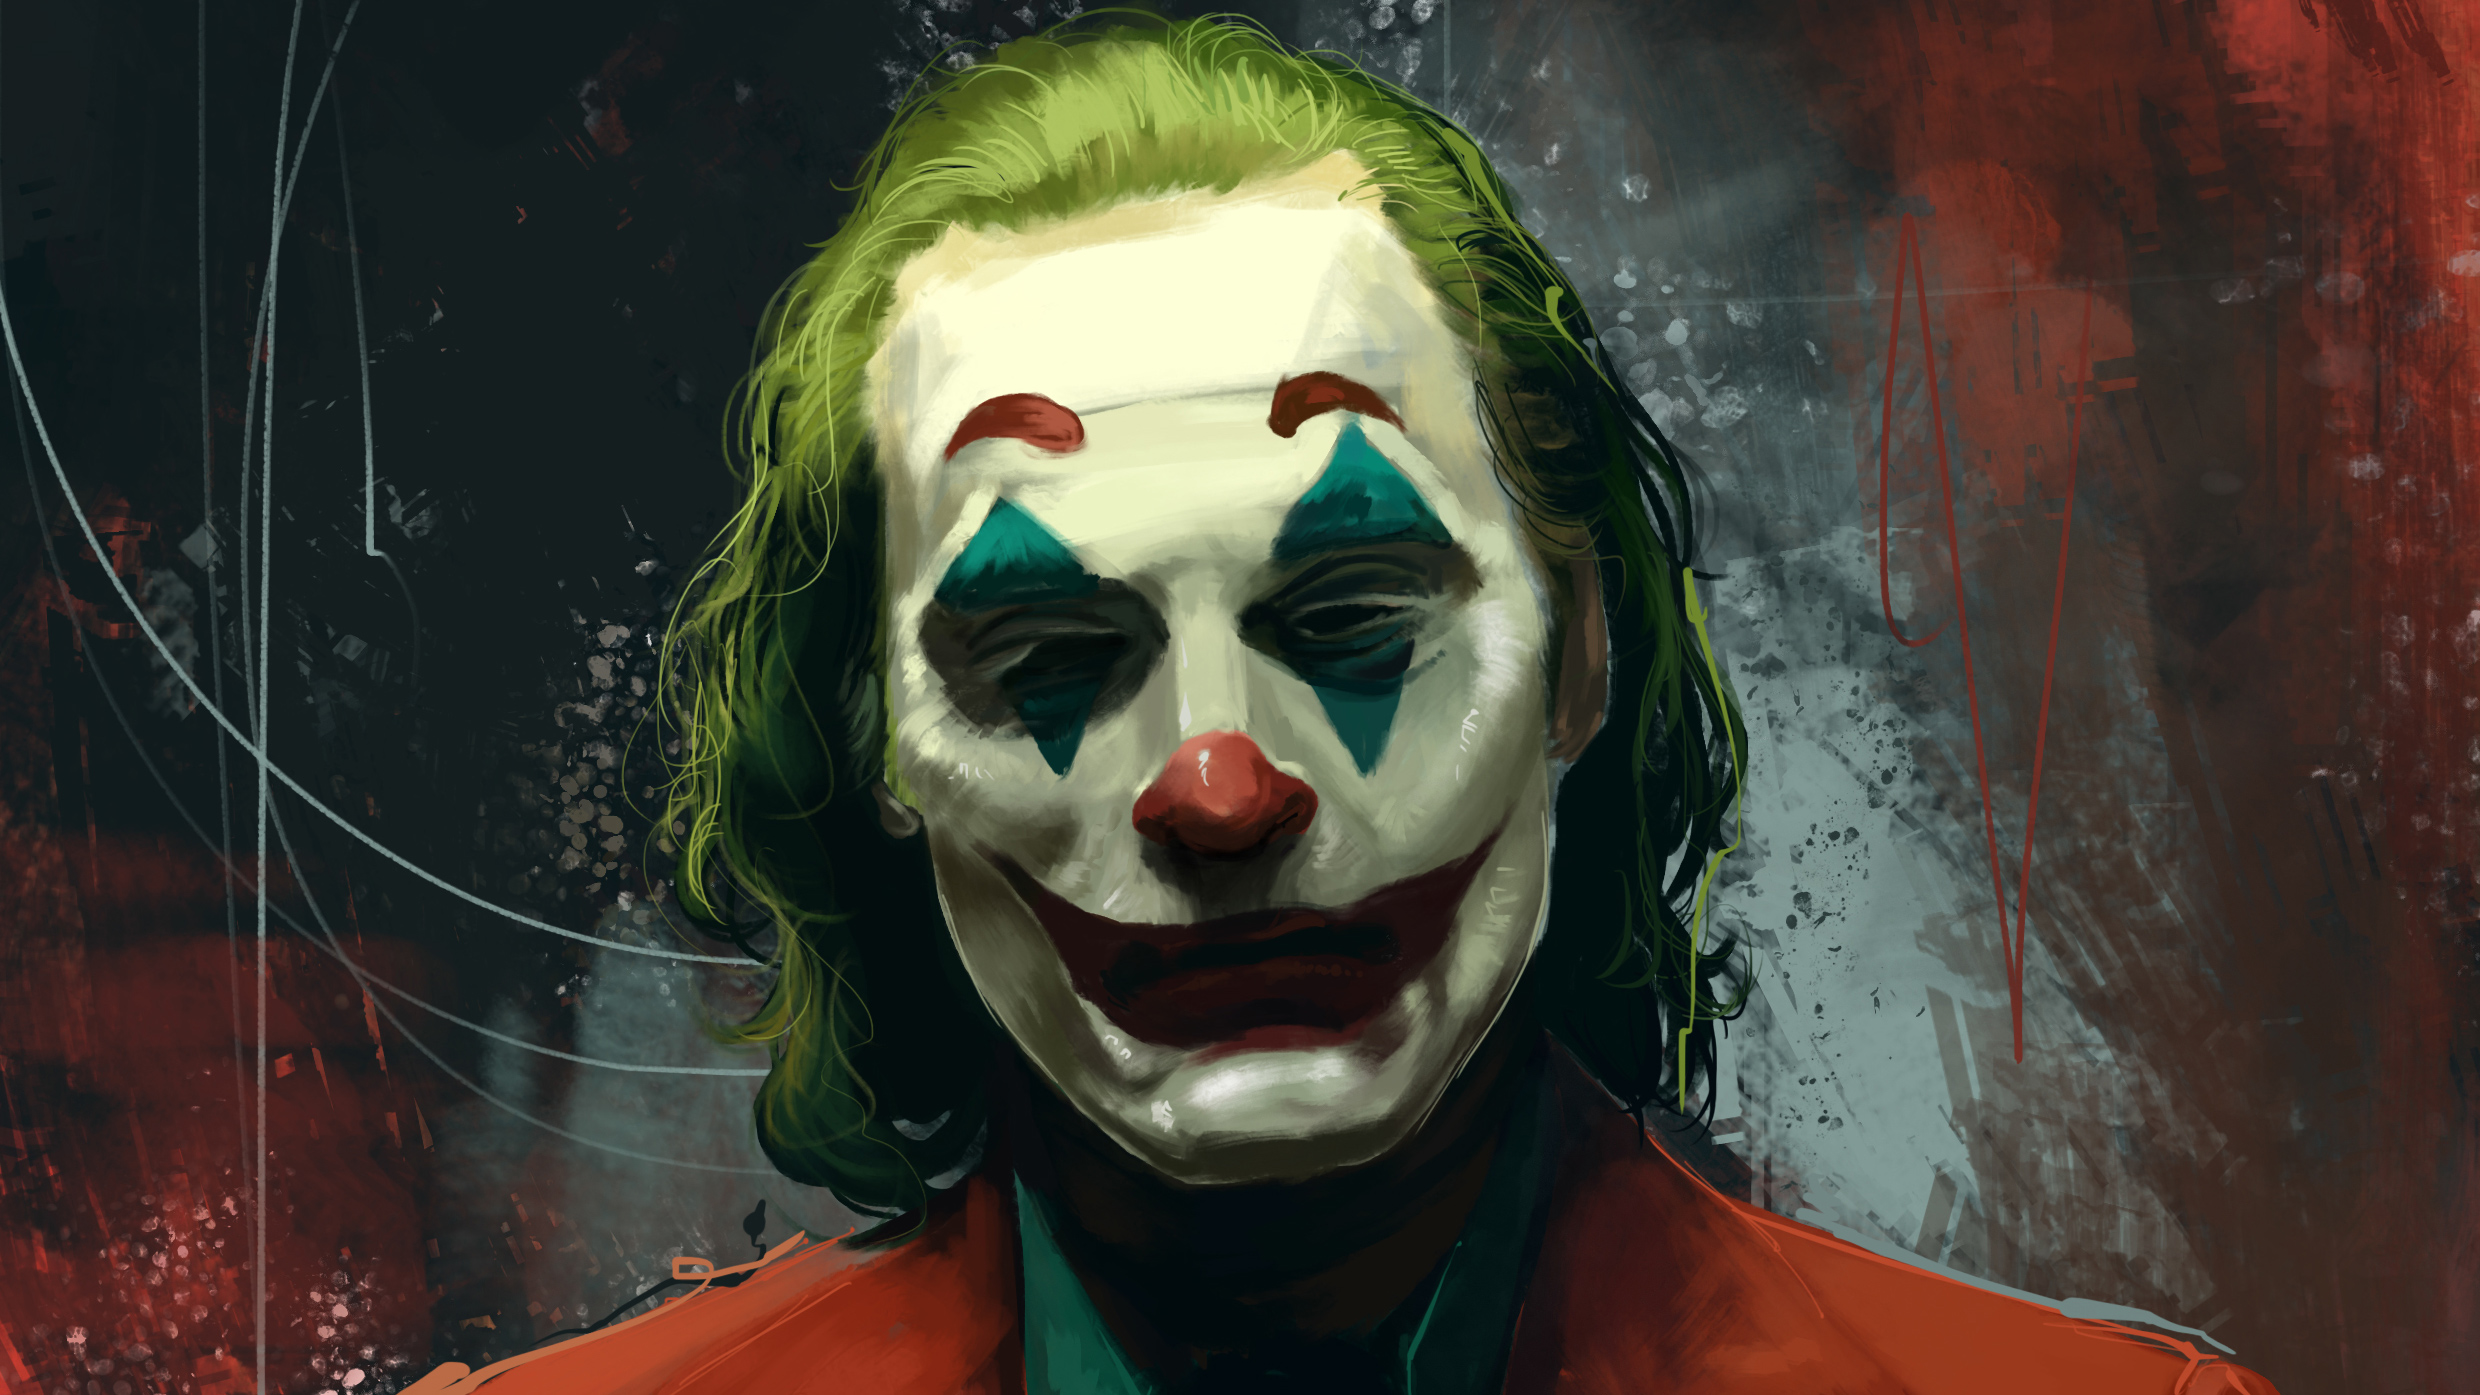 General 2480x1395 Joaquin Phoenix Joker Joker (2019 Movie) Batman DC Comics DC Universe clown villains super villain comics movie characters digital art artwork fictional fictional character people